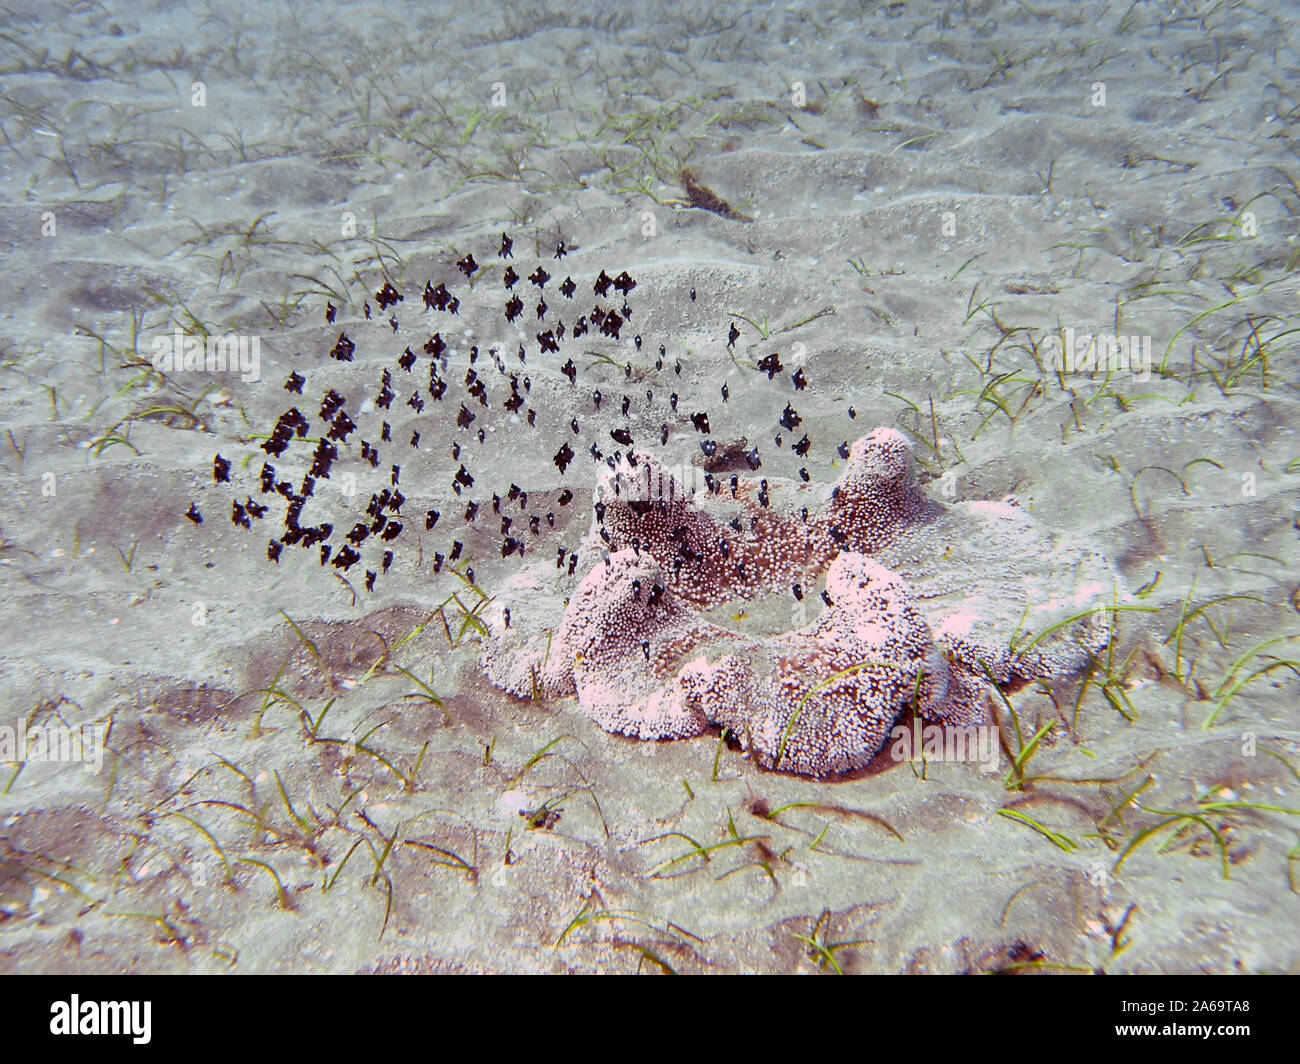 Three Spot Domino Damselfish (Dascyllus trimaculatus) Stock Photo